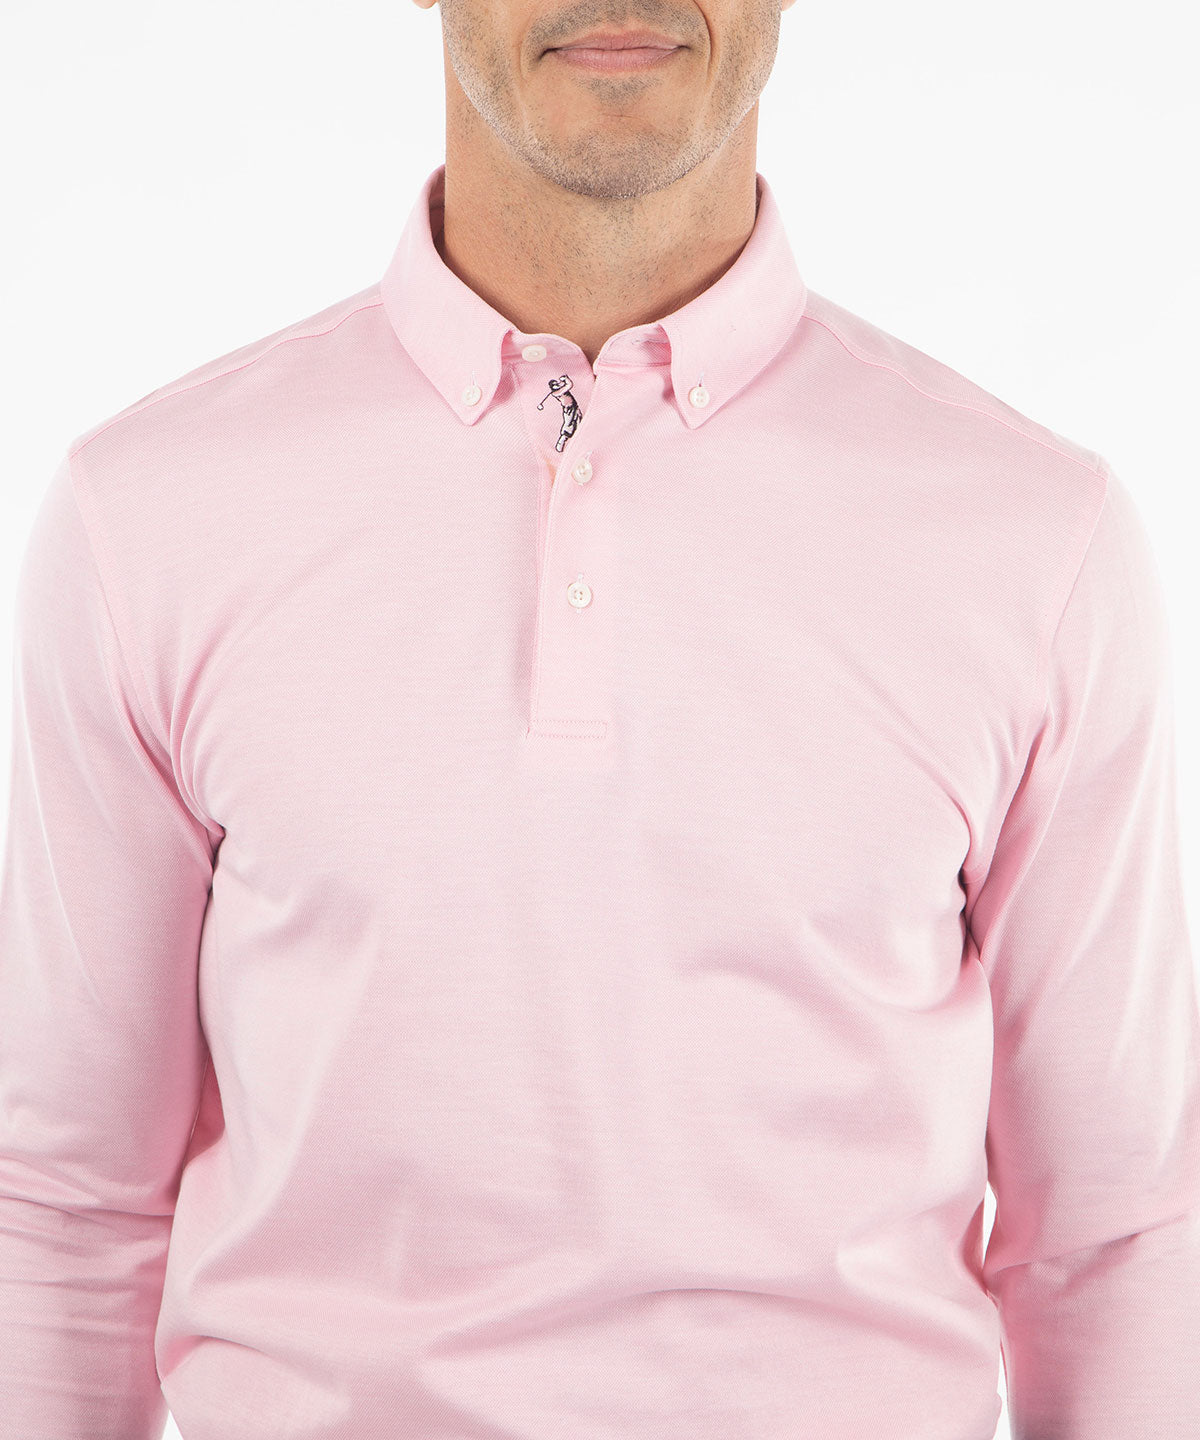 Men's Polo Shirts - Cashmere & Cotton Long Sleeve Polo Shirts